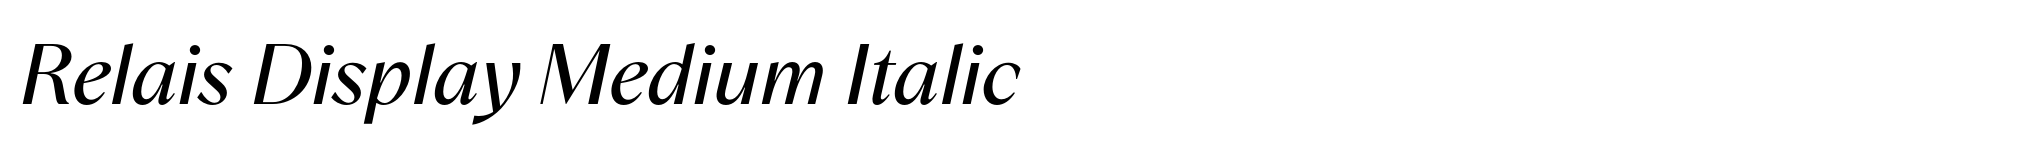 Relais Display Medium Italic image